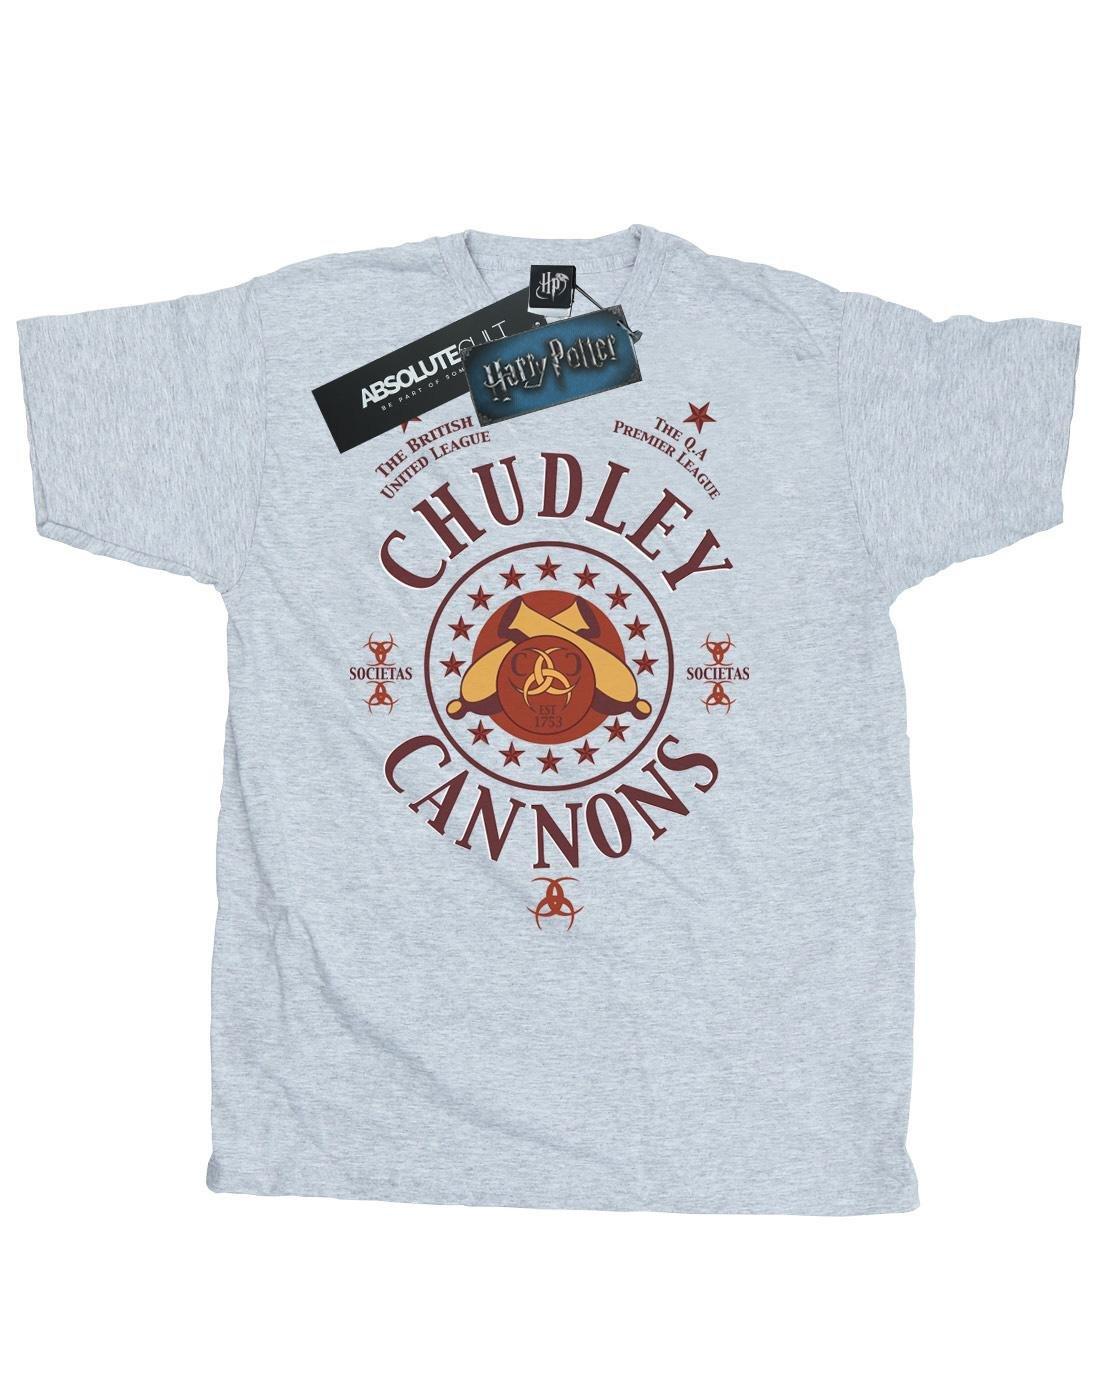 Chudley Cannons Logo Tshirt Herren Grau 3XL von Harry Potter